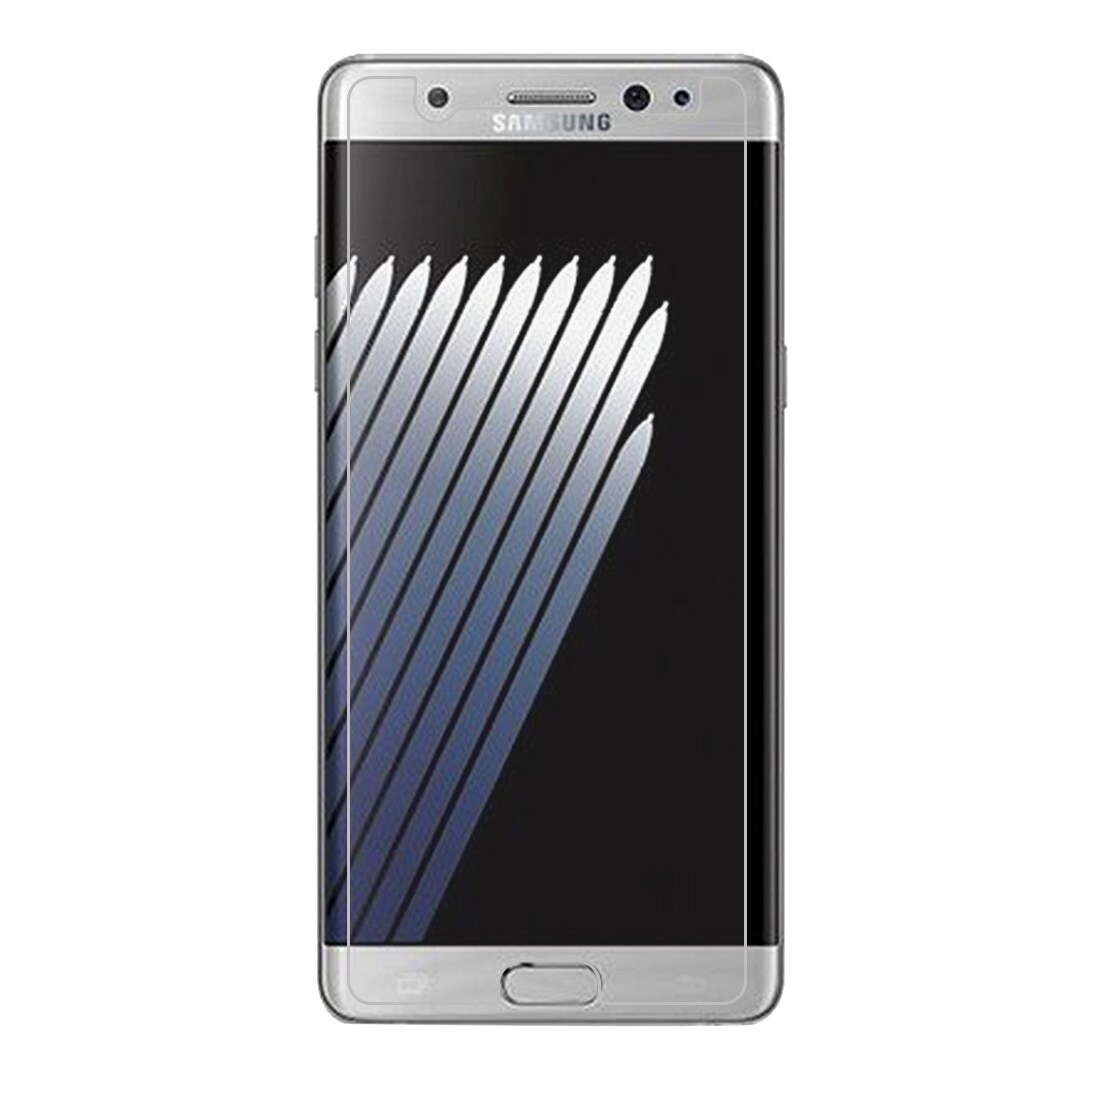 Lasisuoja Samsung Galaxy Note 7 - 2Pakkaus temperoitu 0.26mm 9H